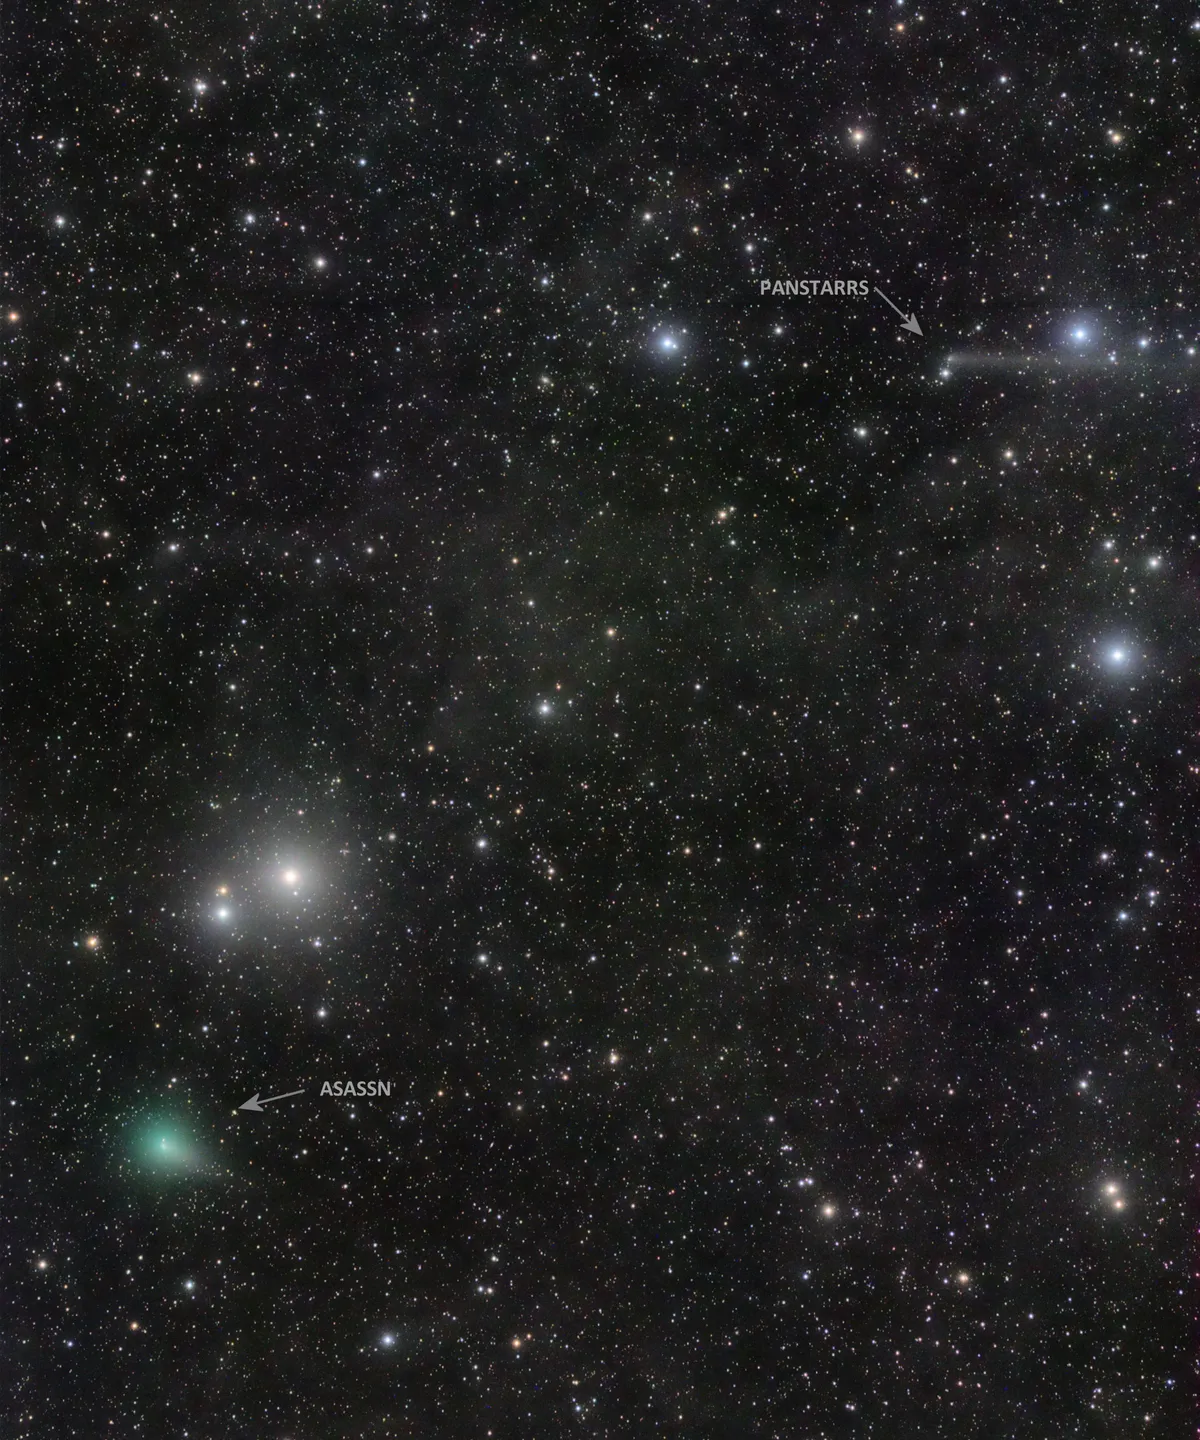 Comets Conjunction ASASSN & PANSTARRS by José J. Chambó, Mayhill, New Mexico. Equipment: Takahashi FSQ-106ED f/5.0, SBIG STL-11000M